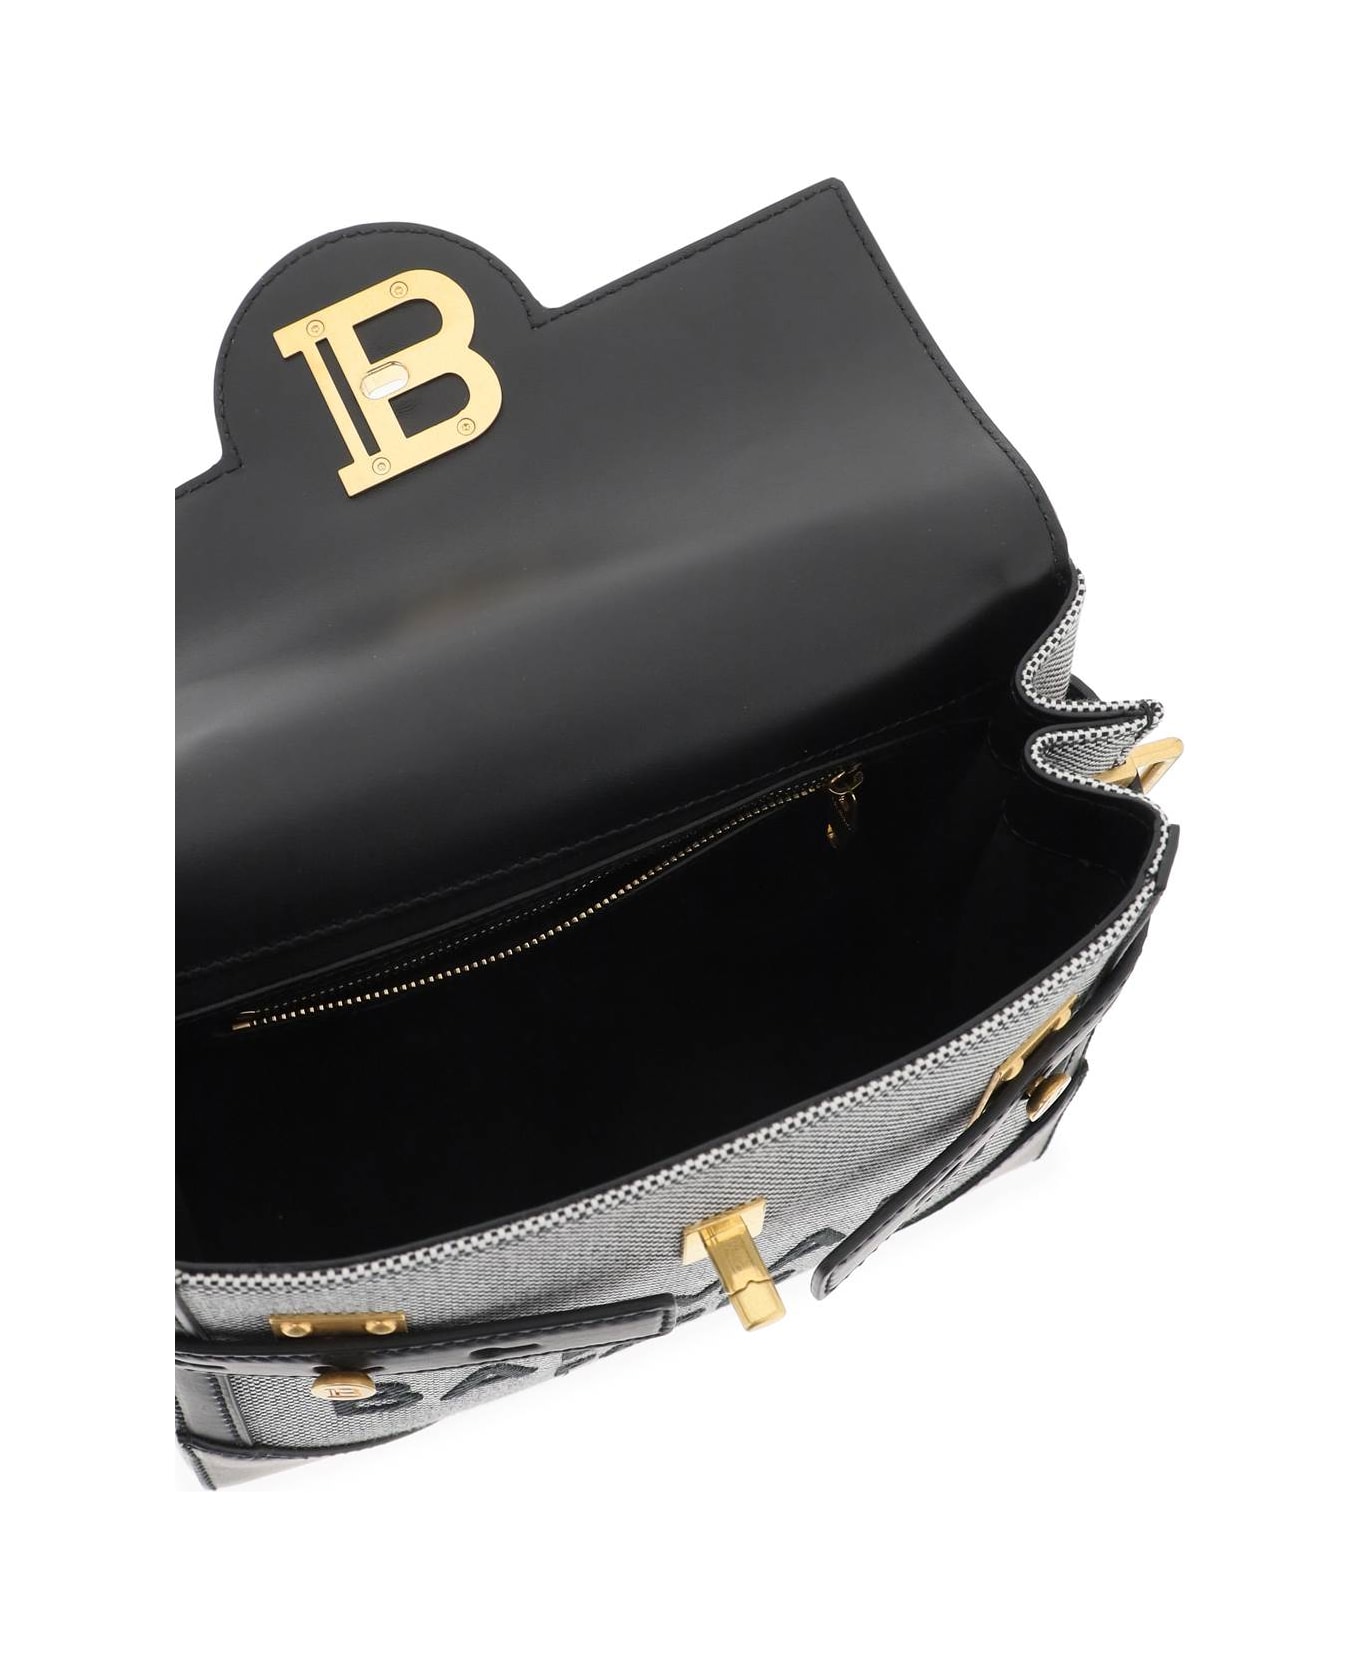 Balmain B-buzz 23 Handbag - Noir/blanc